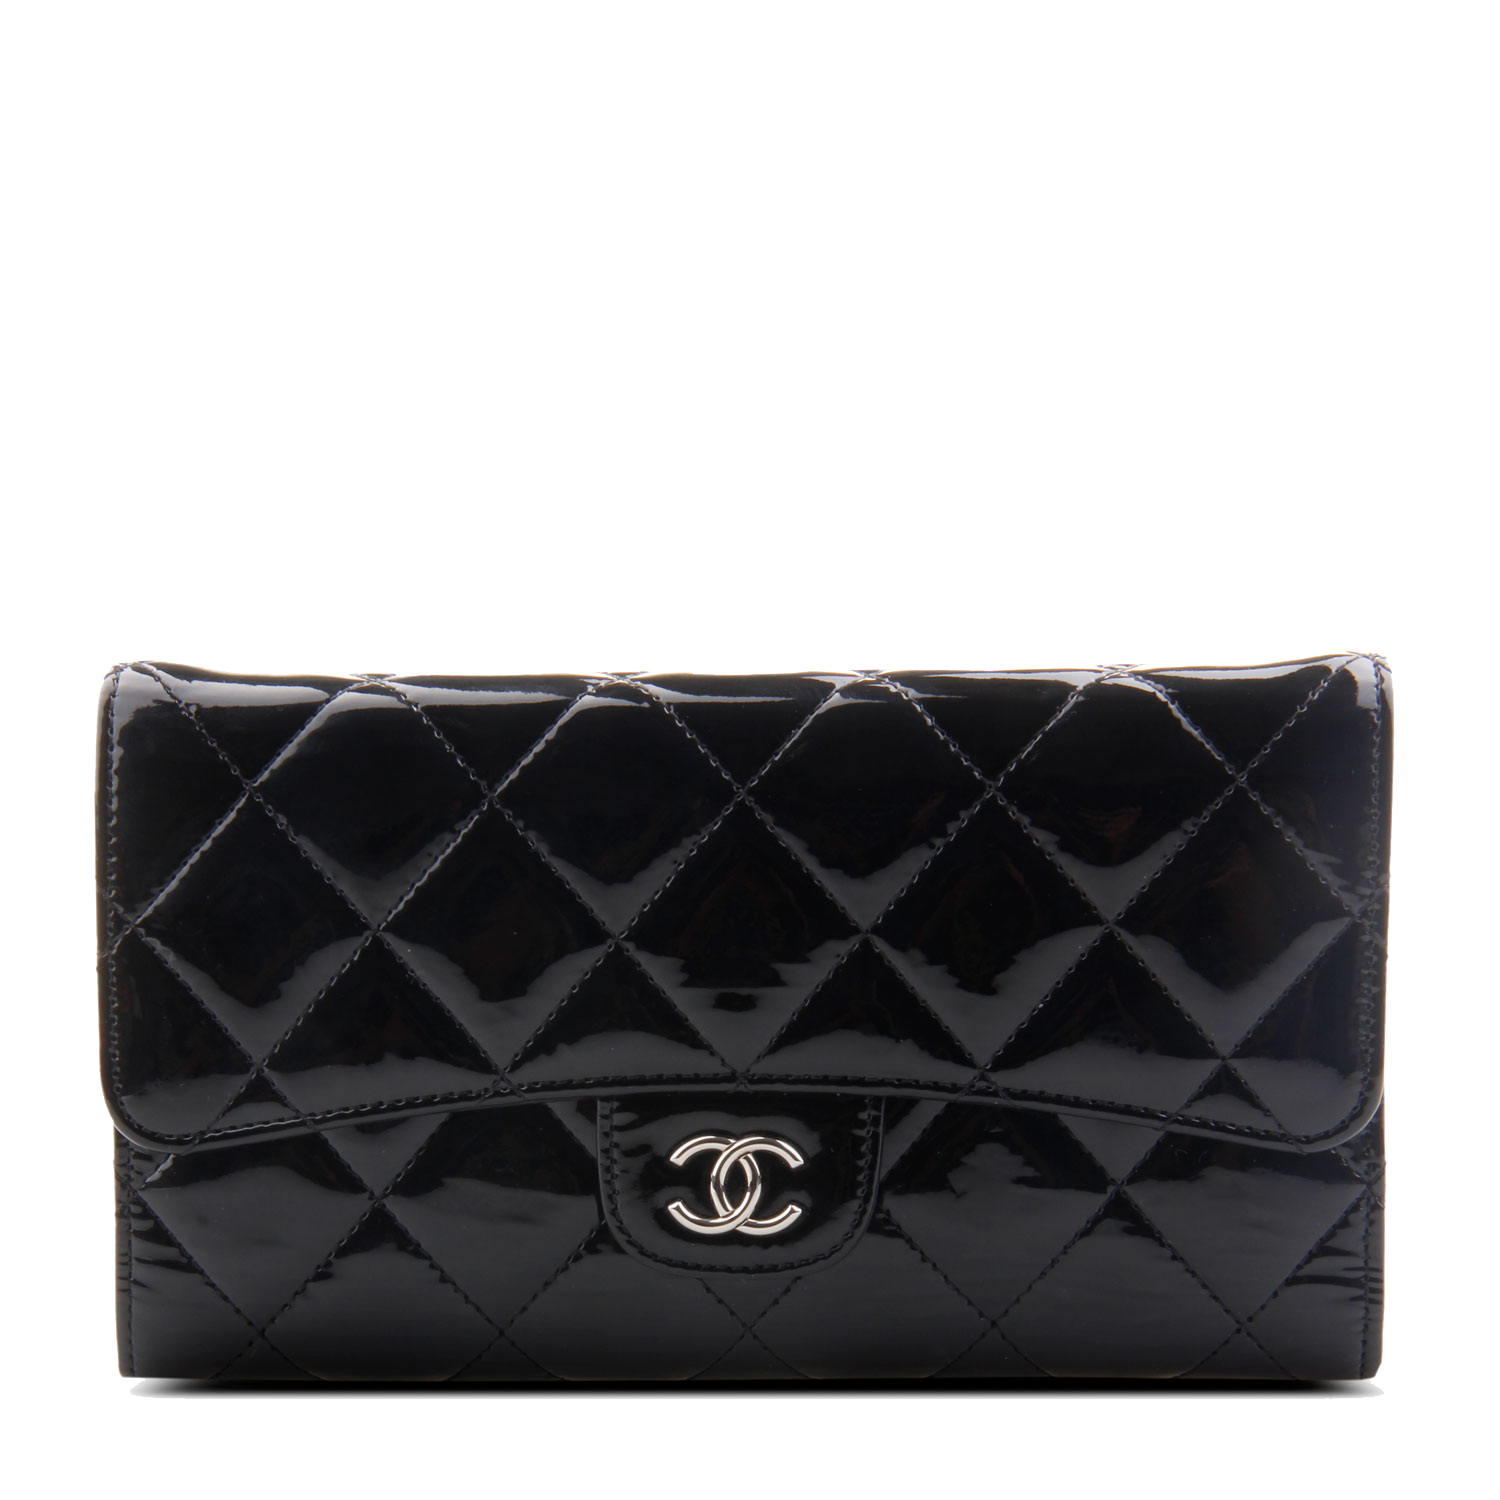 Patent Leather Purse Wallet Black Handbag Chanel PNG Image